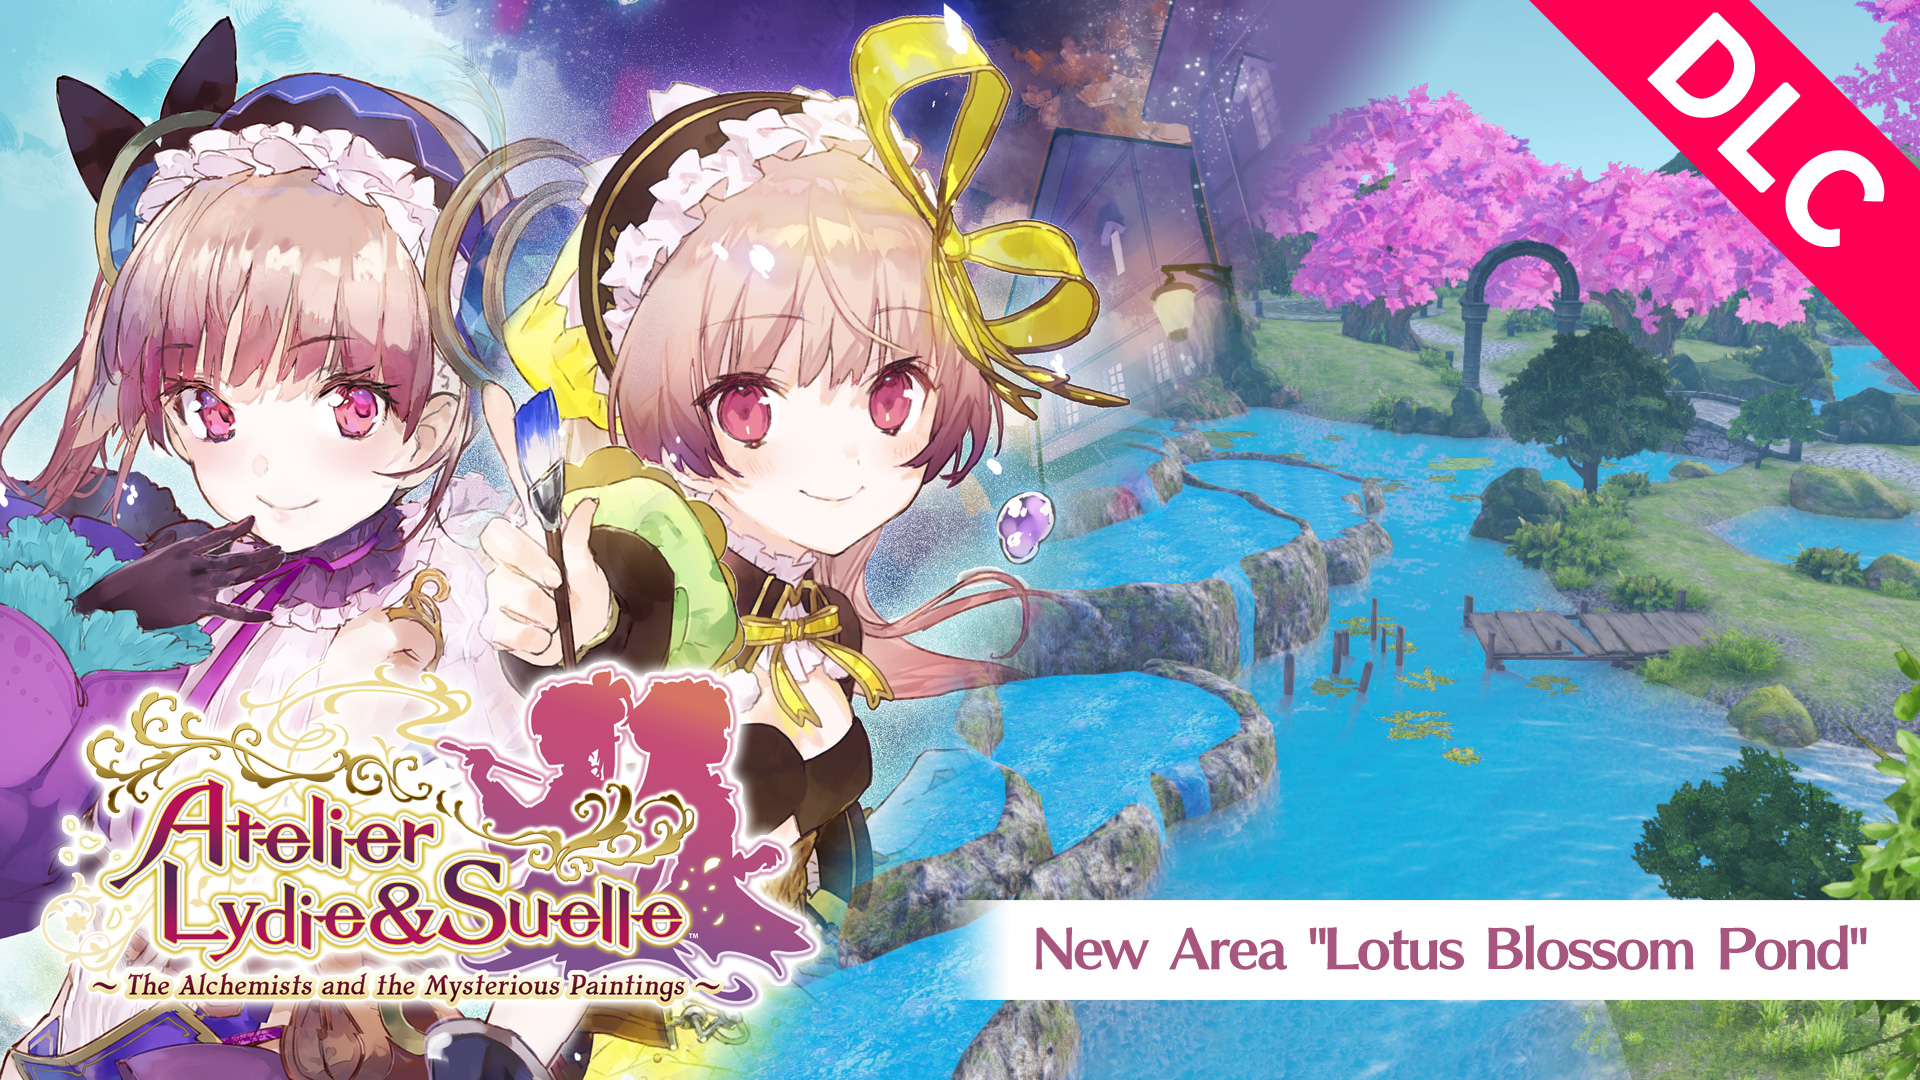 New Area "Lotus Blossom Pond"